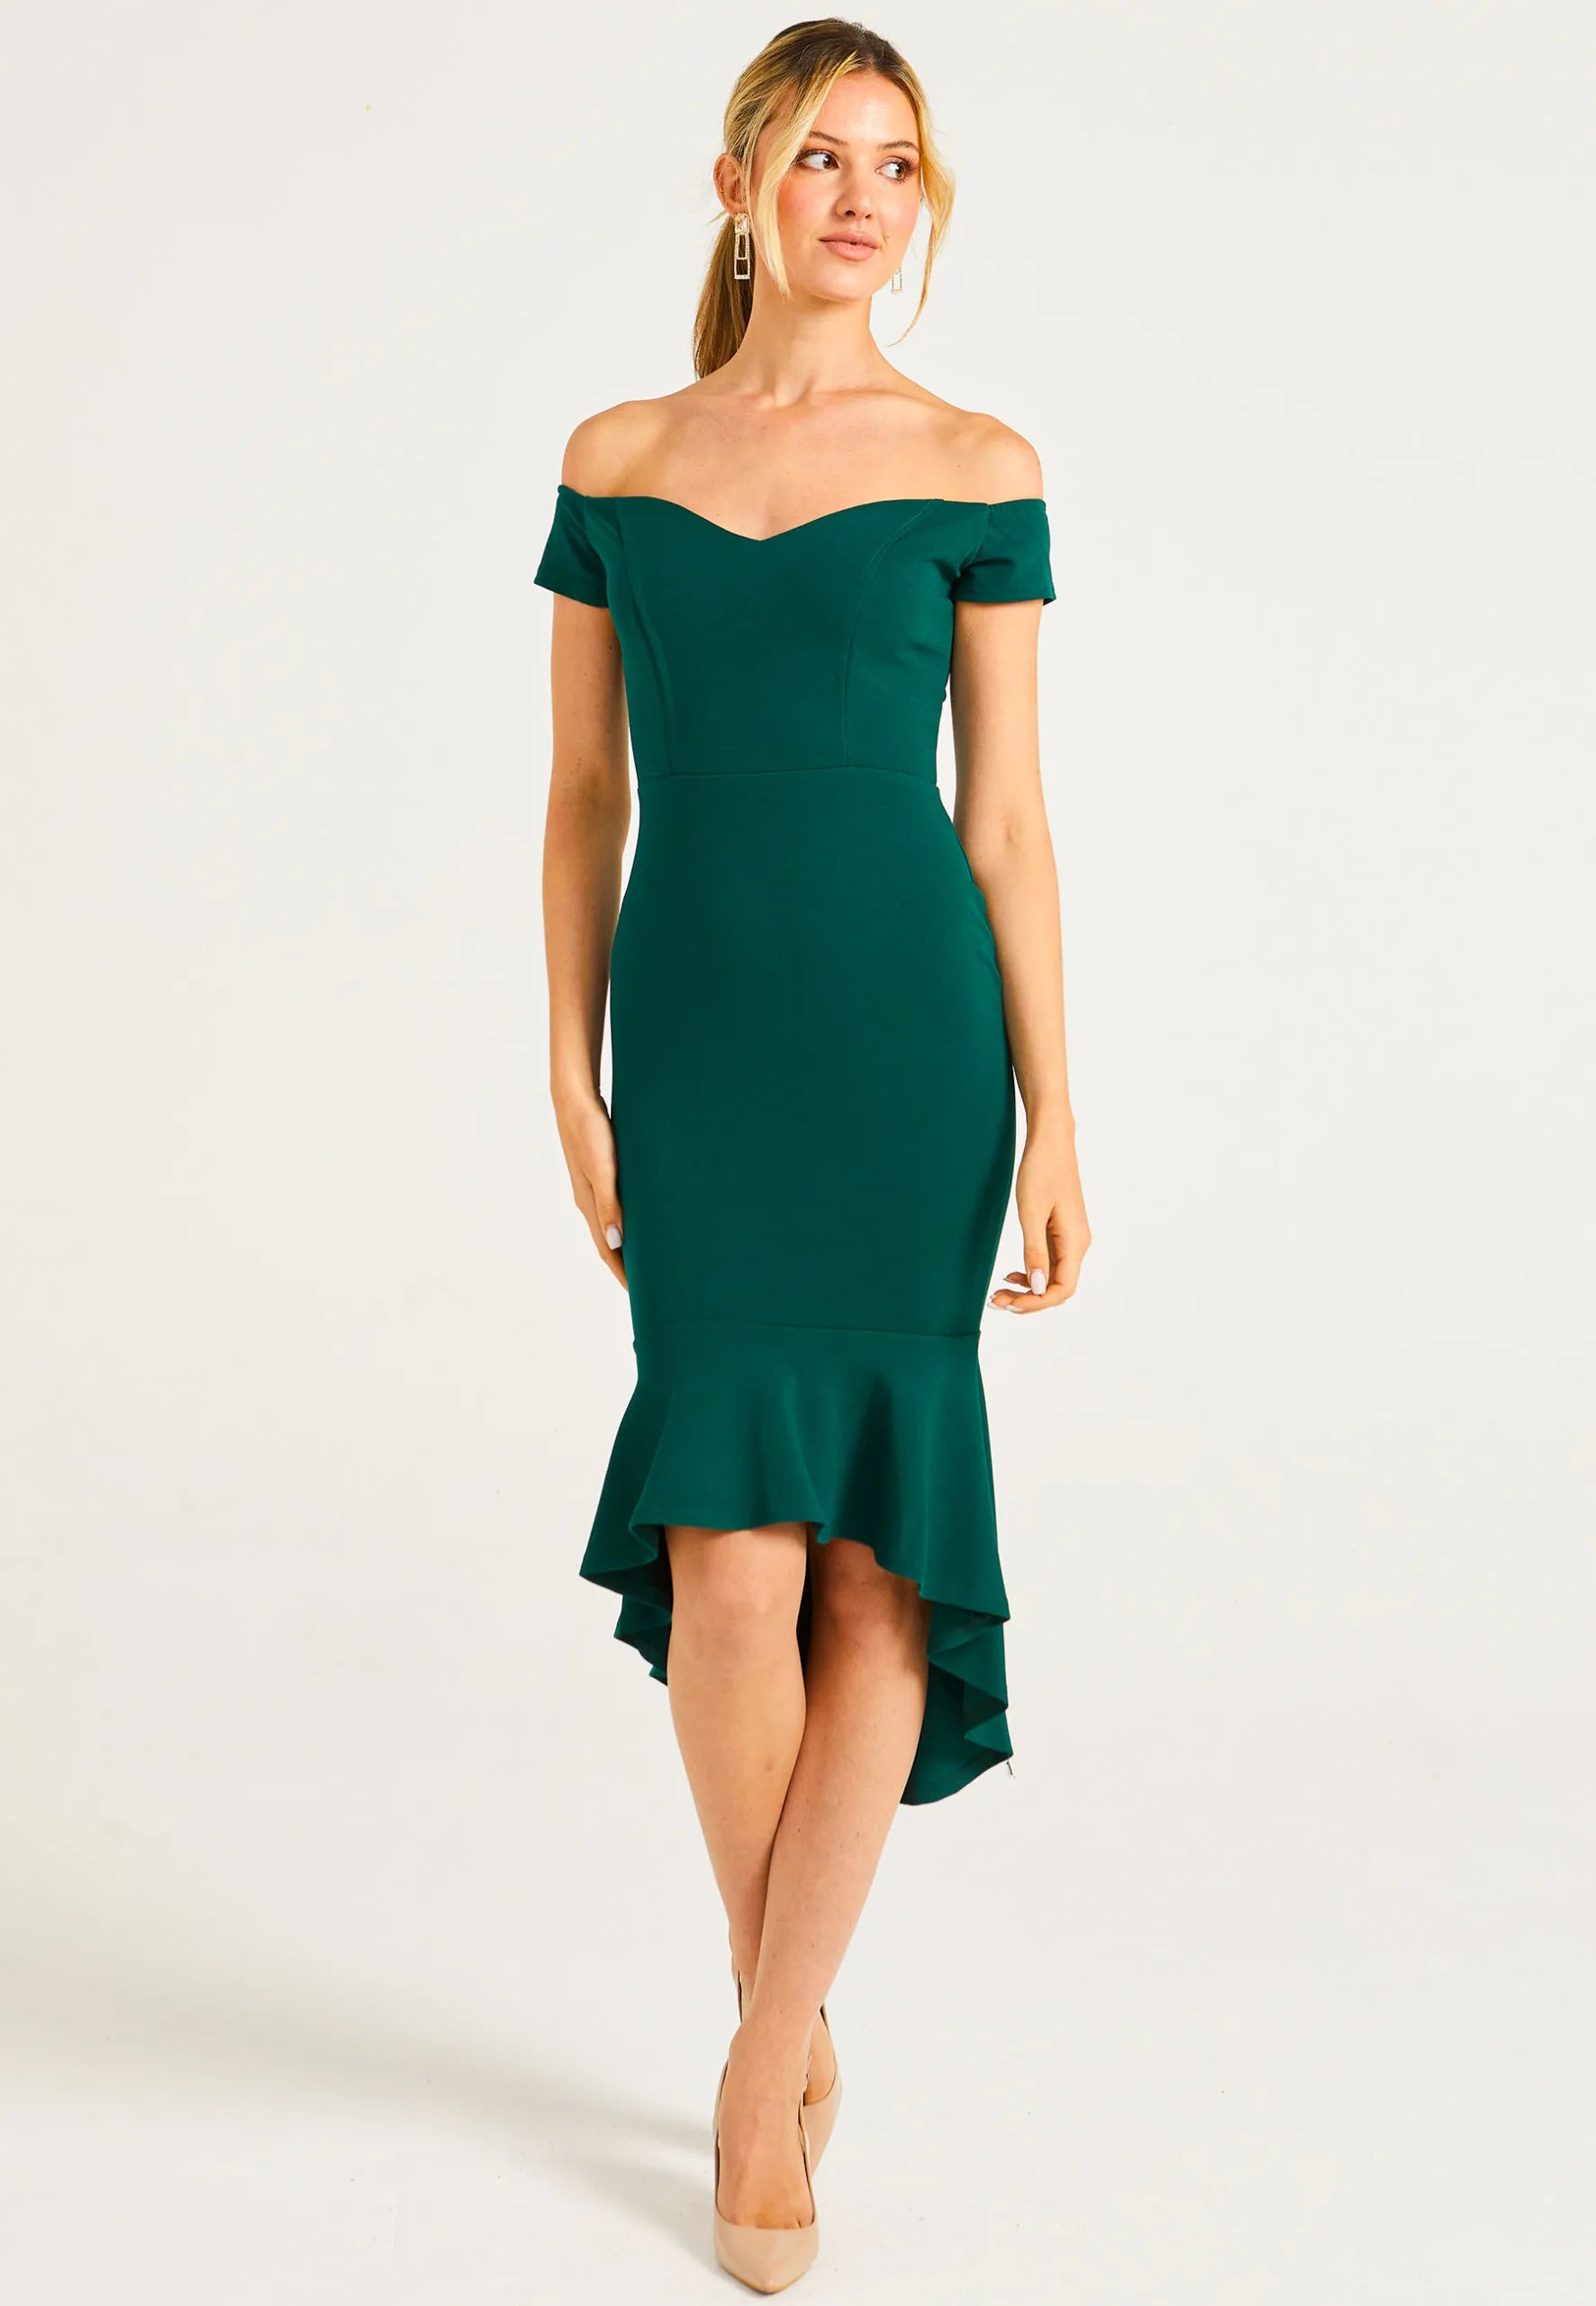 AngelEye Green Bardot Cocktail Dress